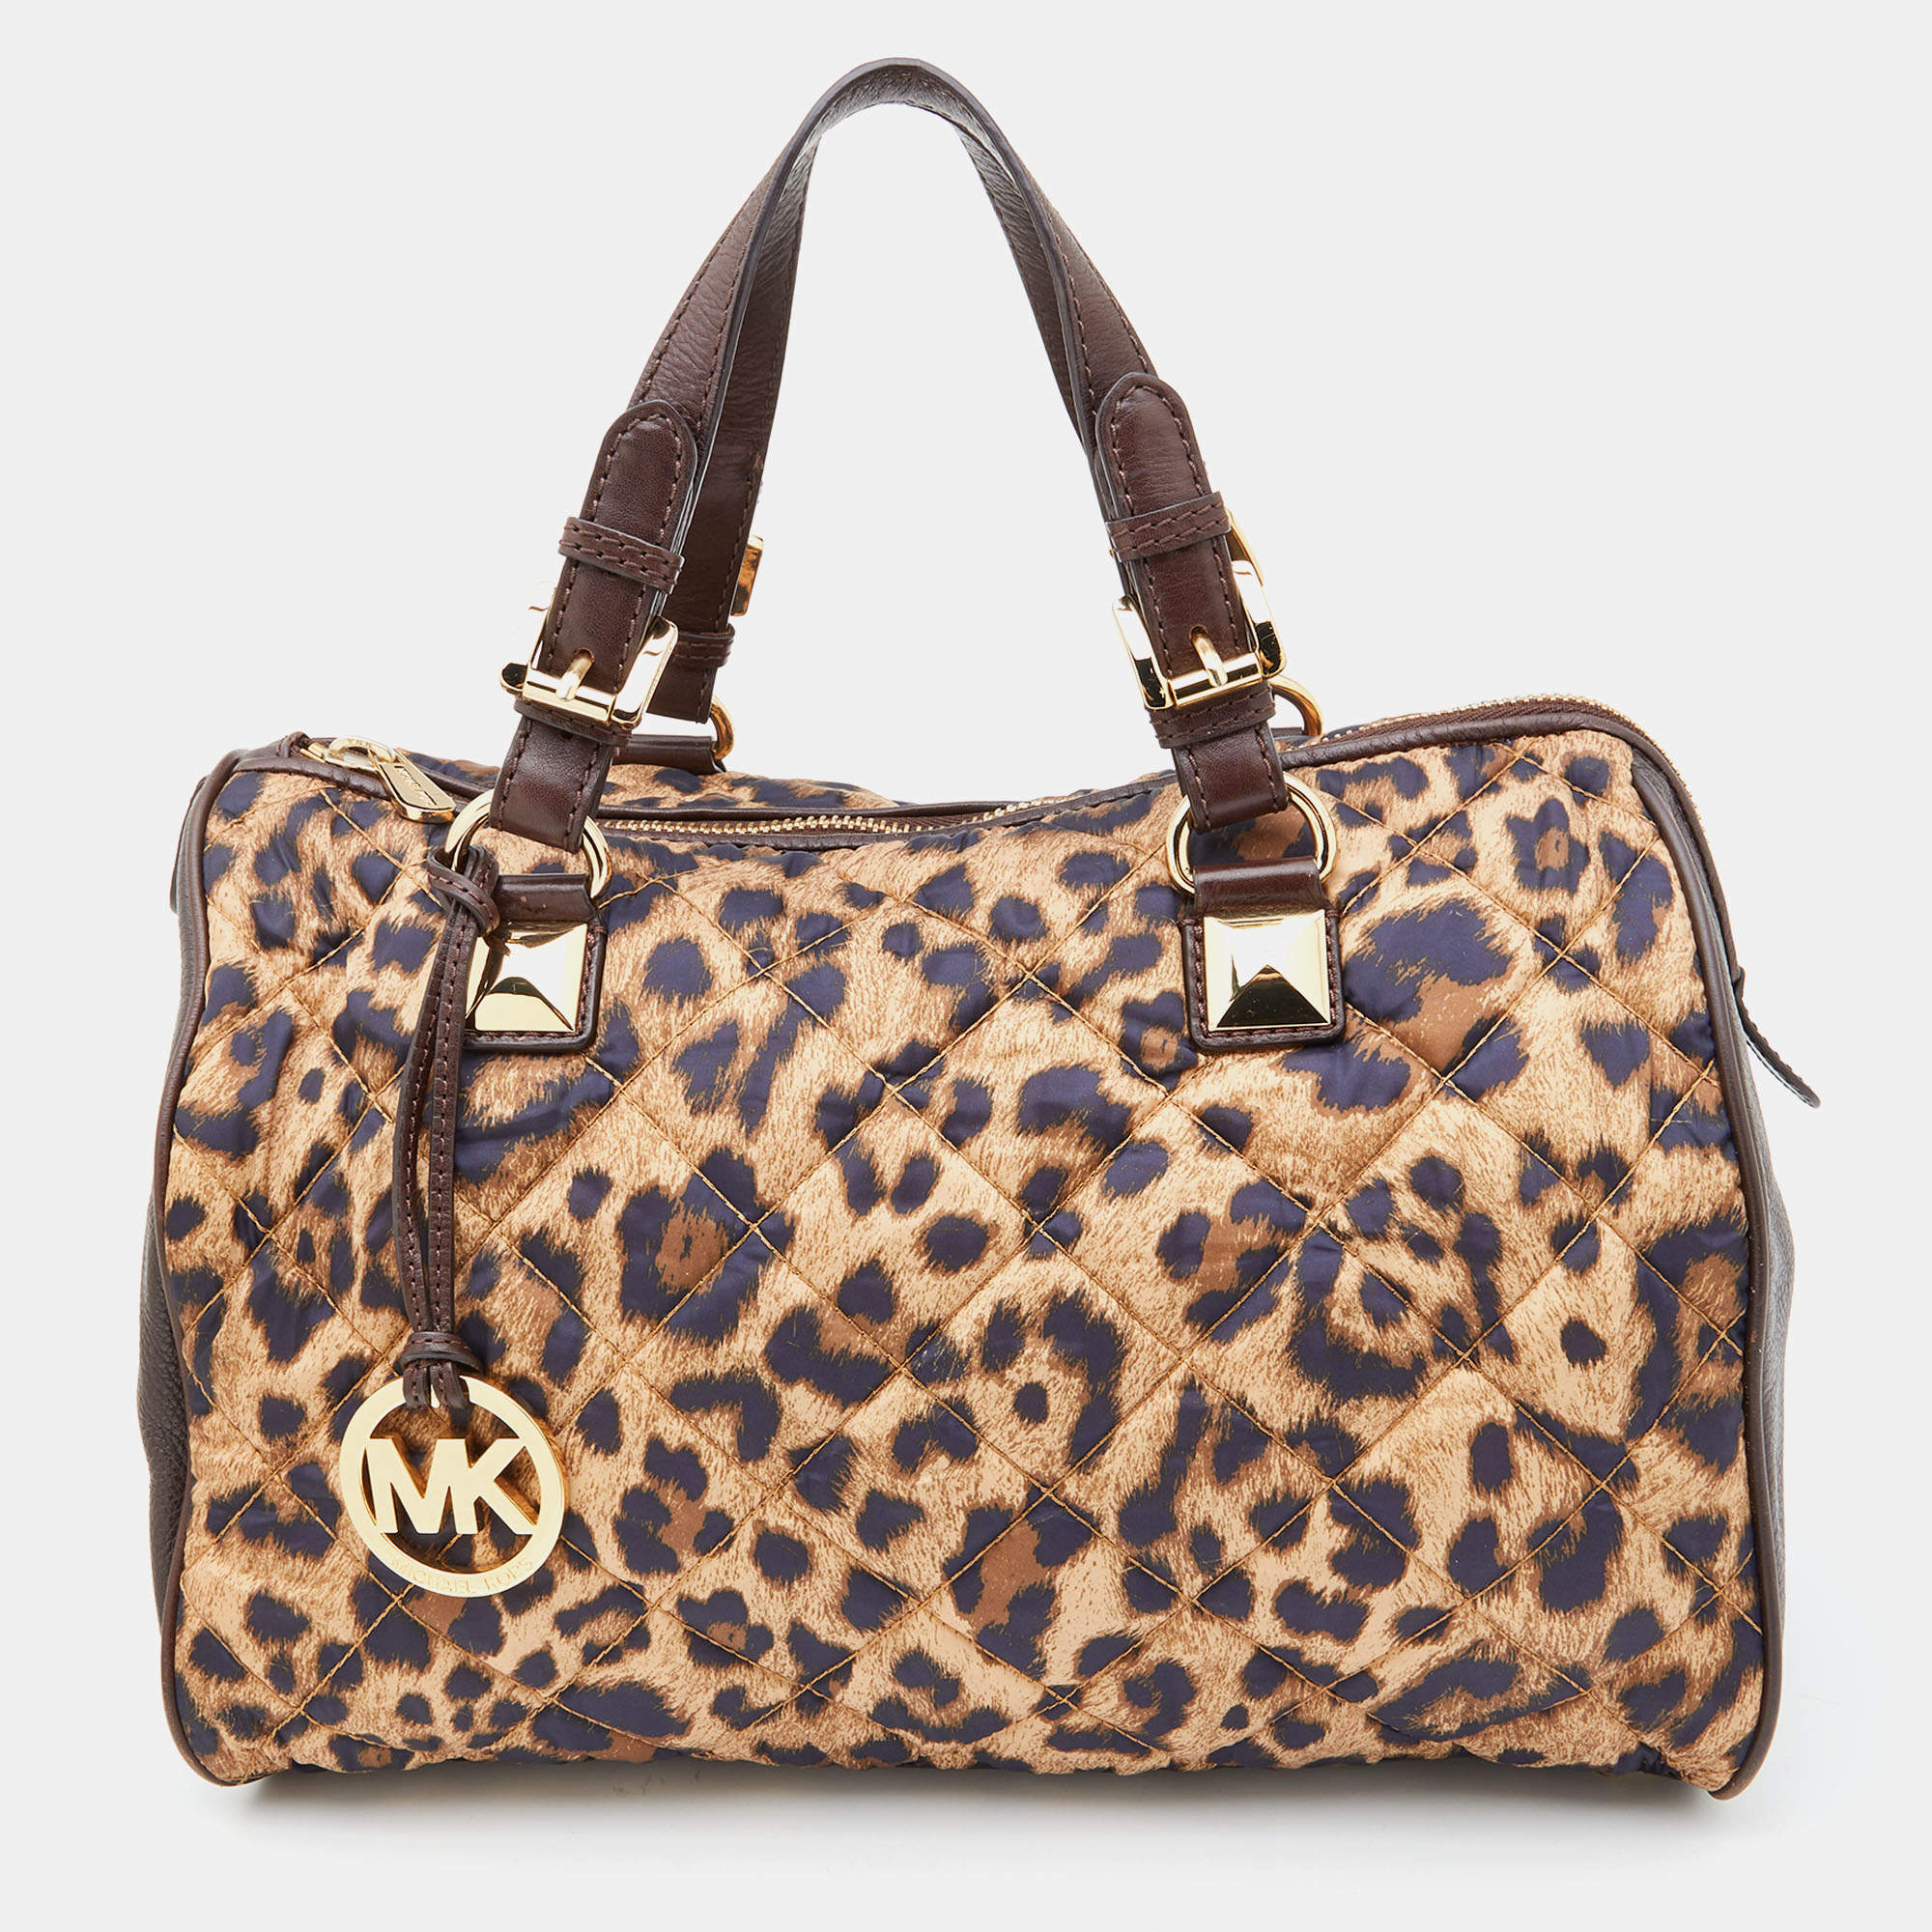 Michael Kors Leopard Print purse | Vinted